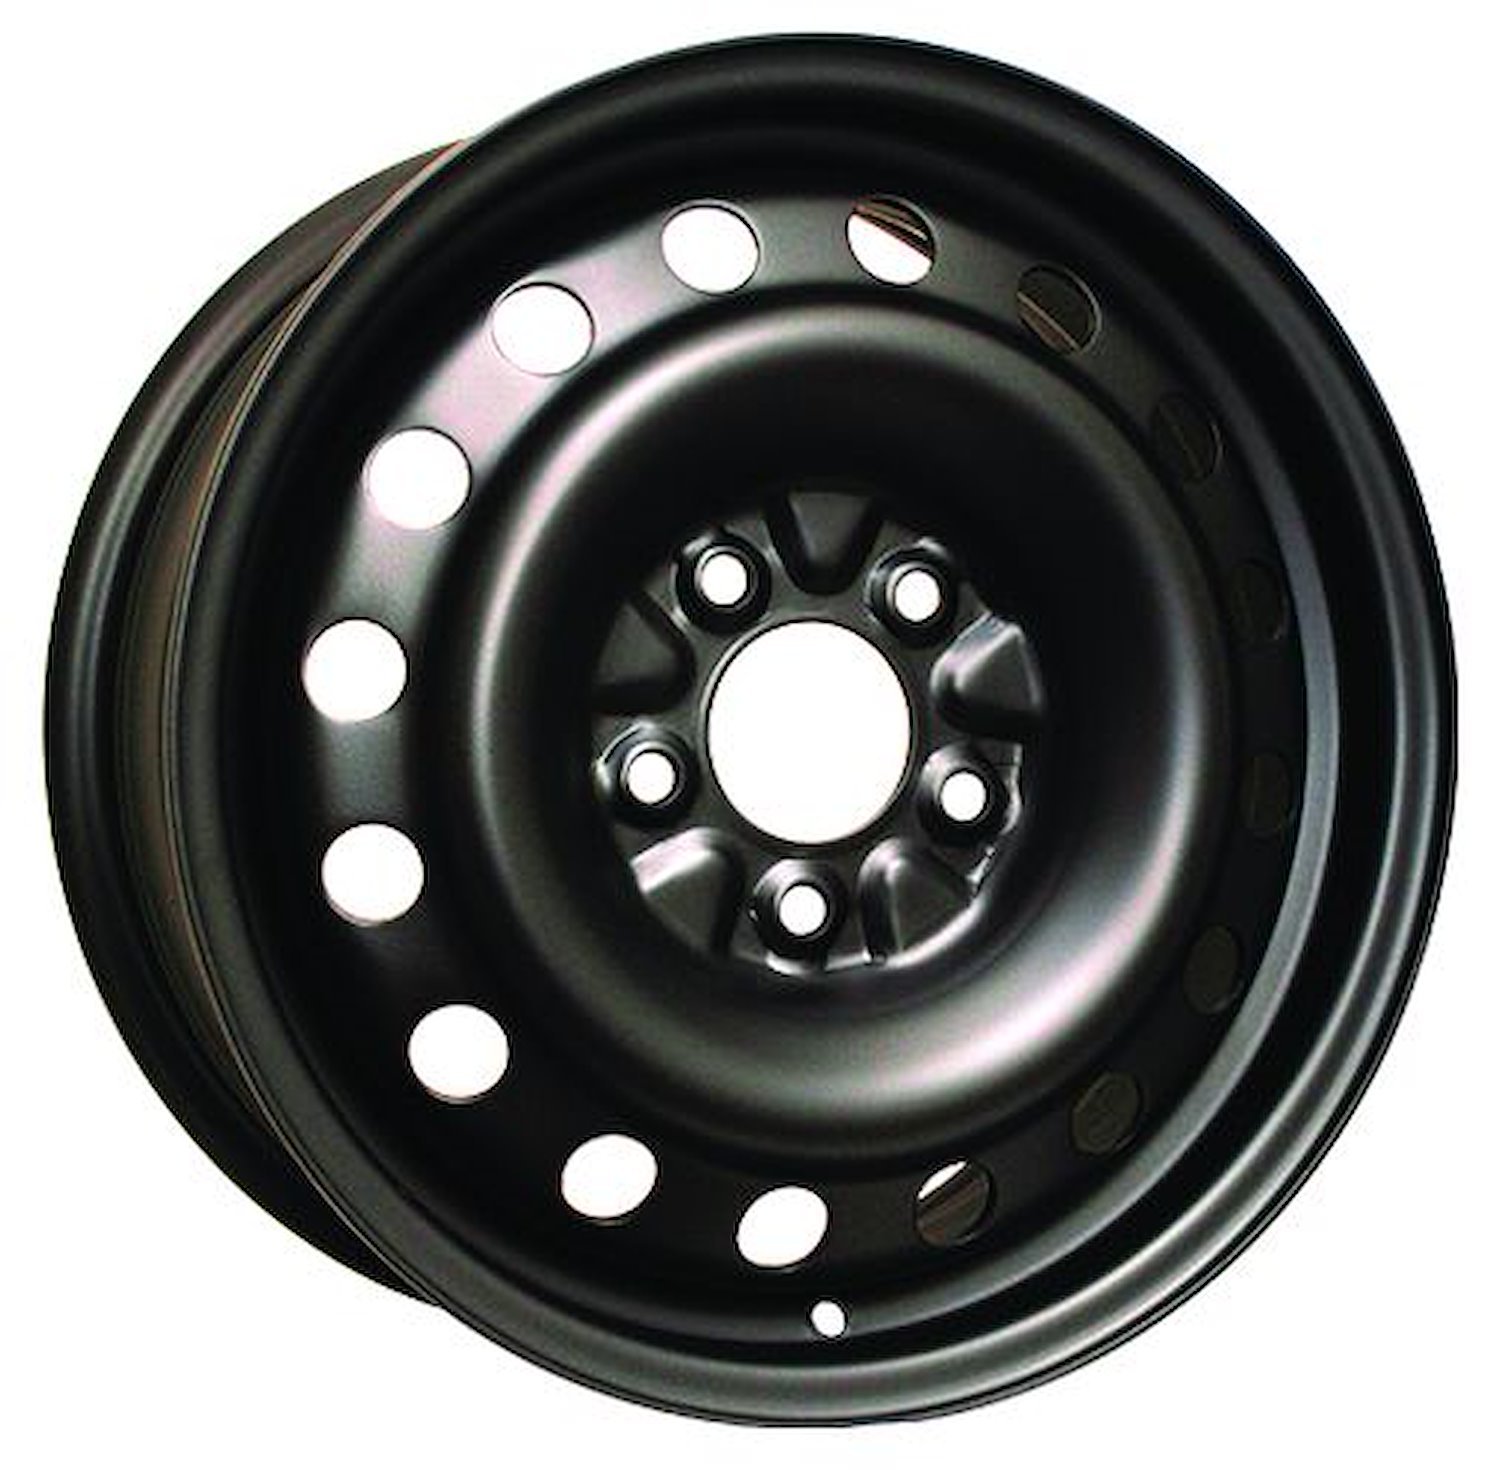 X46515 Steel Wheel [Size: 16" x 6.50"] Black Finish